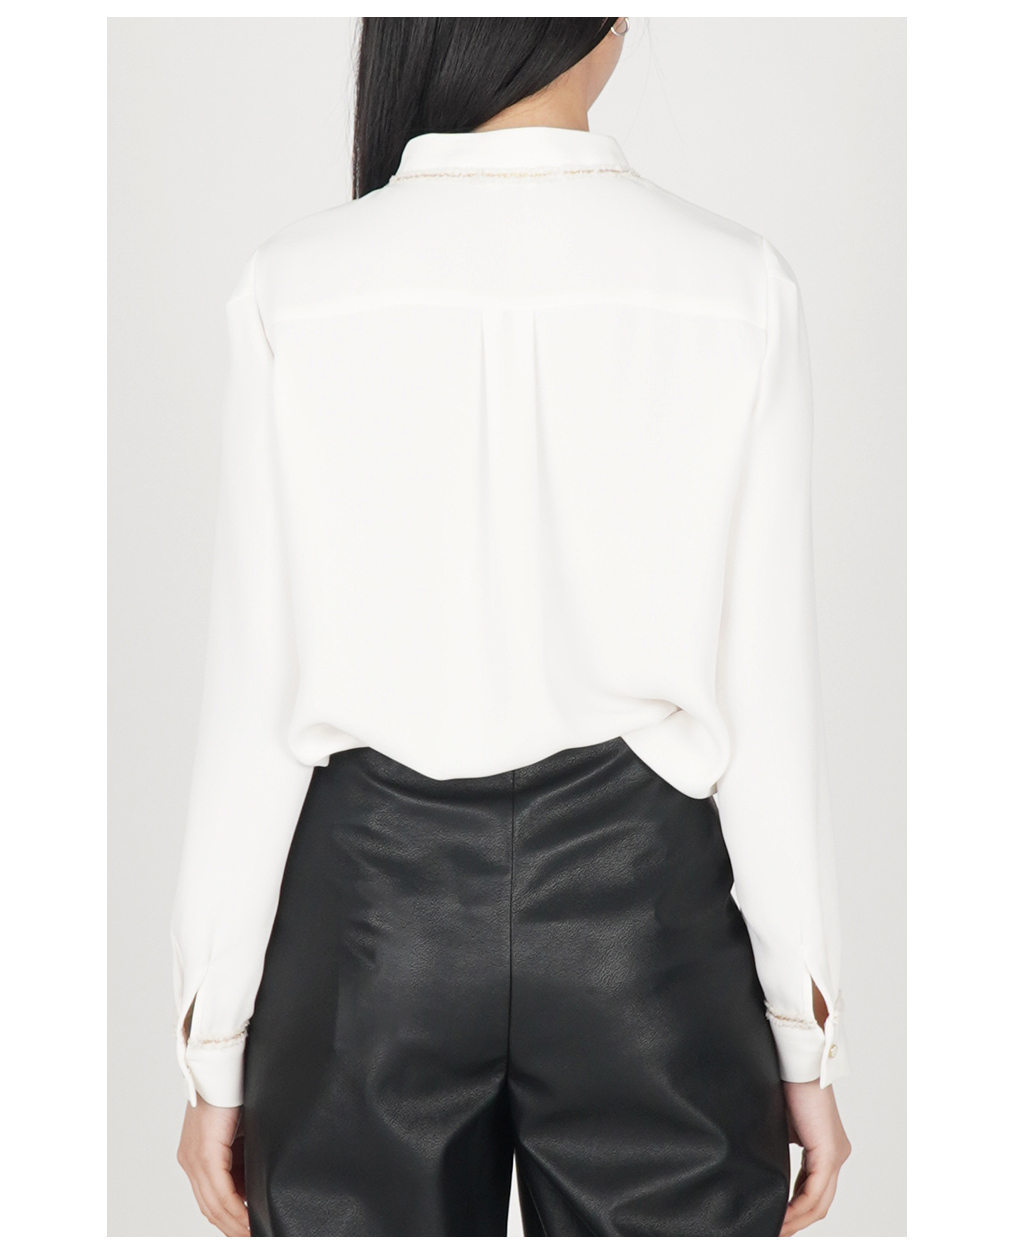 blouse model image-S2L6